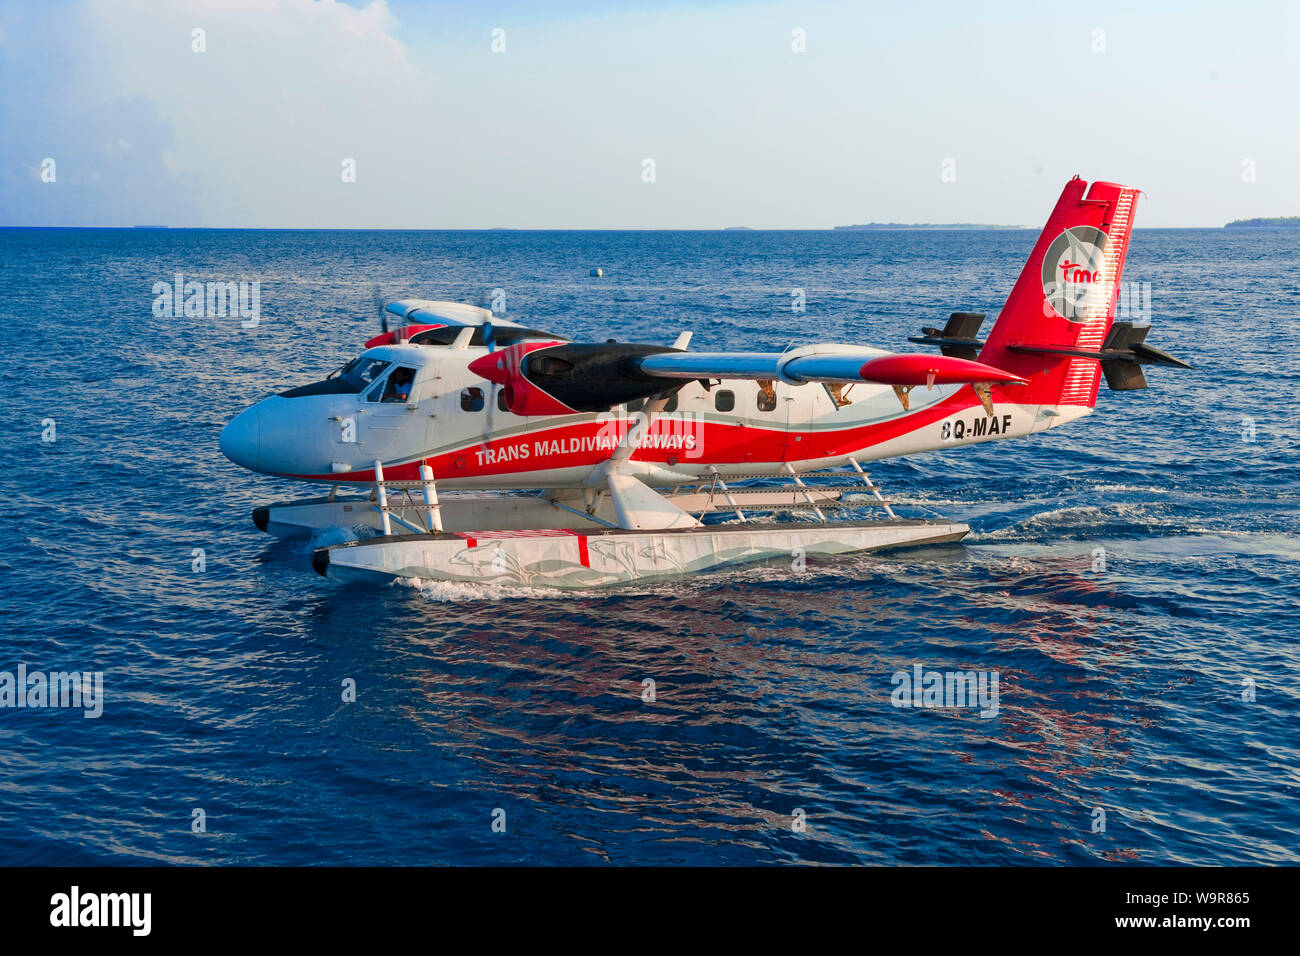 Plano de flotación de despegar, Maldivas, Océano Índico, Asia Foto de stock